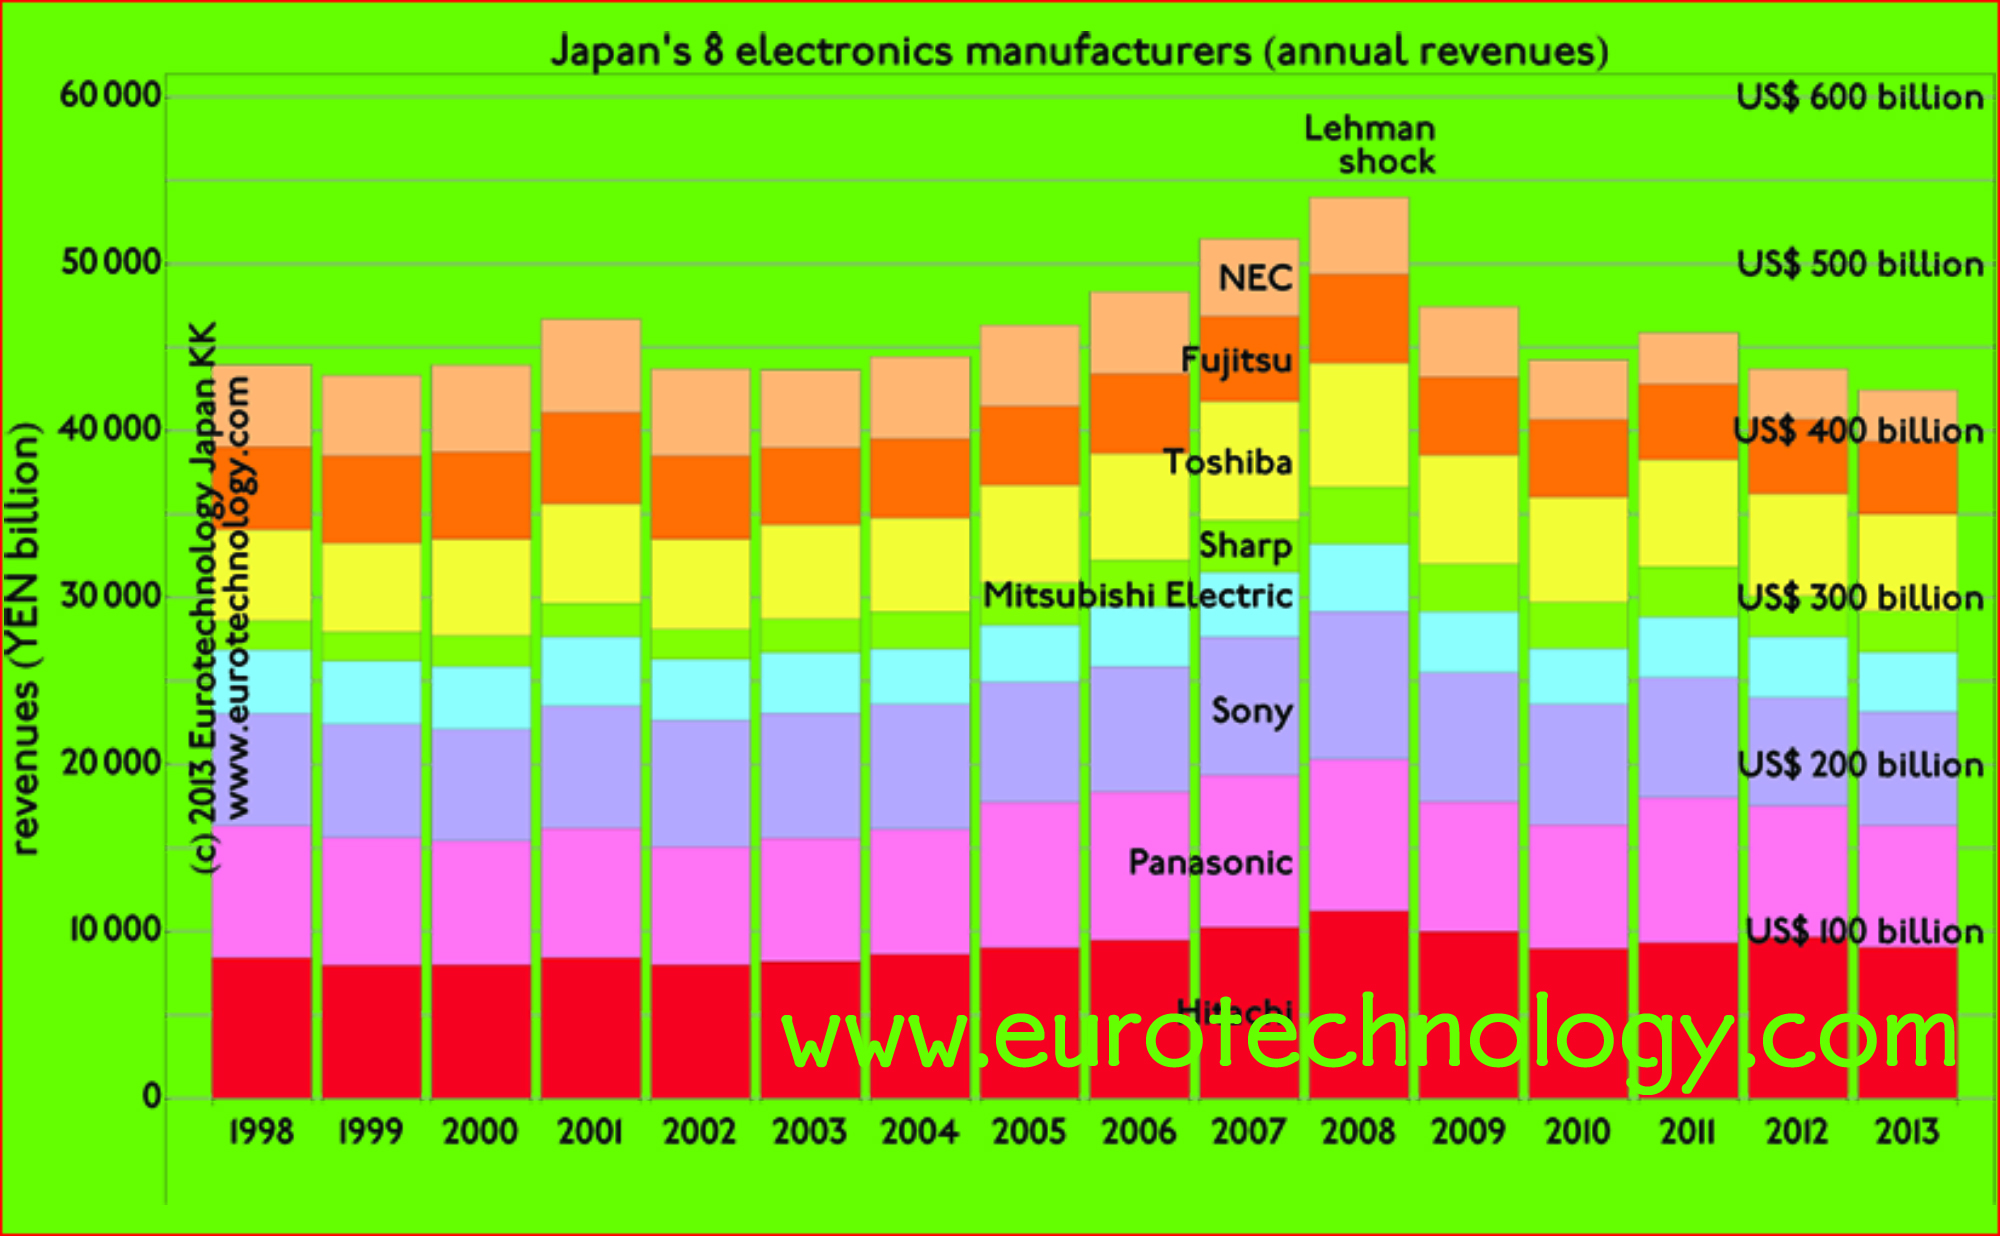 Japan electronics groups: global benchmarking